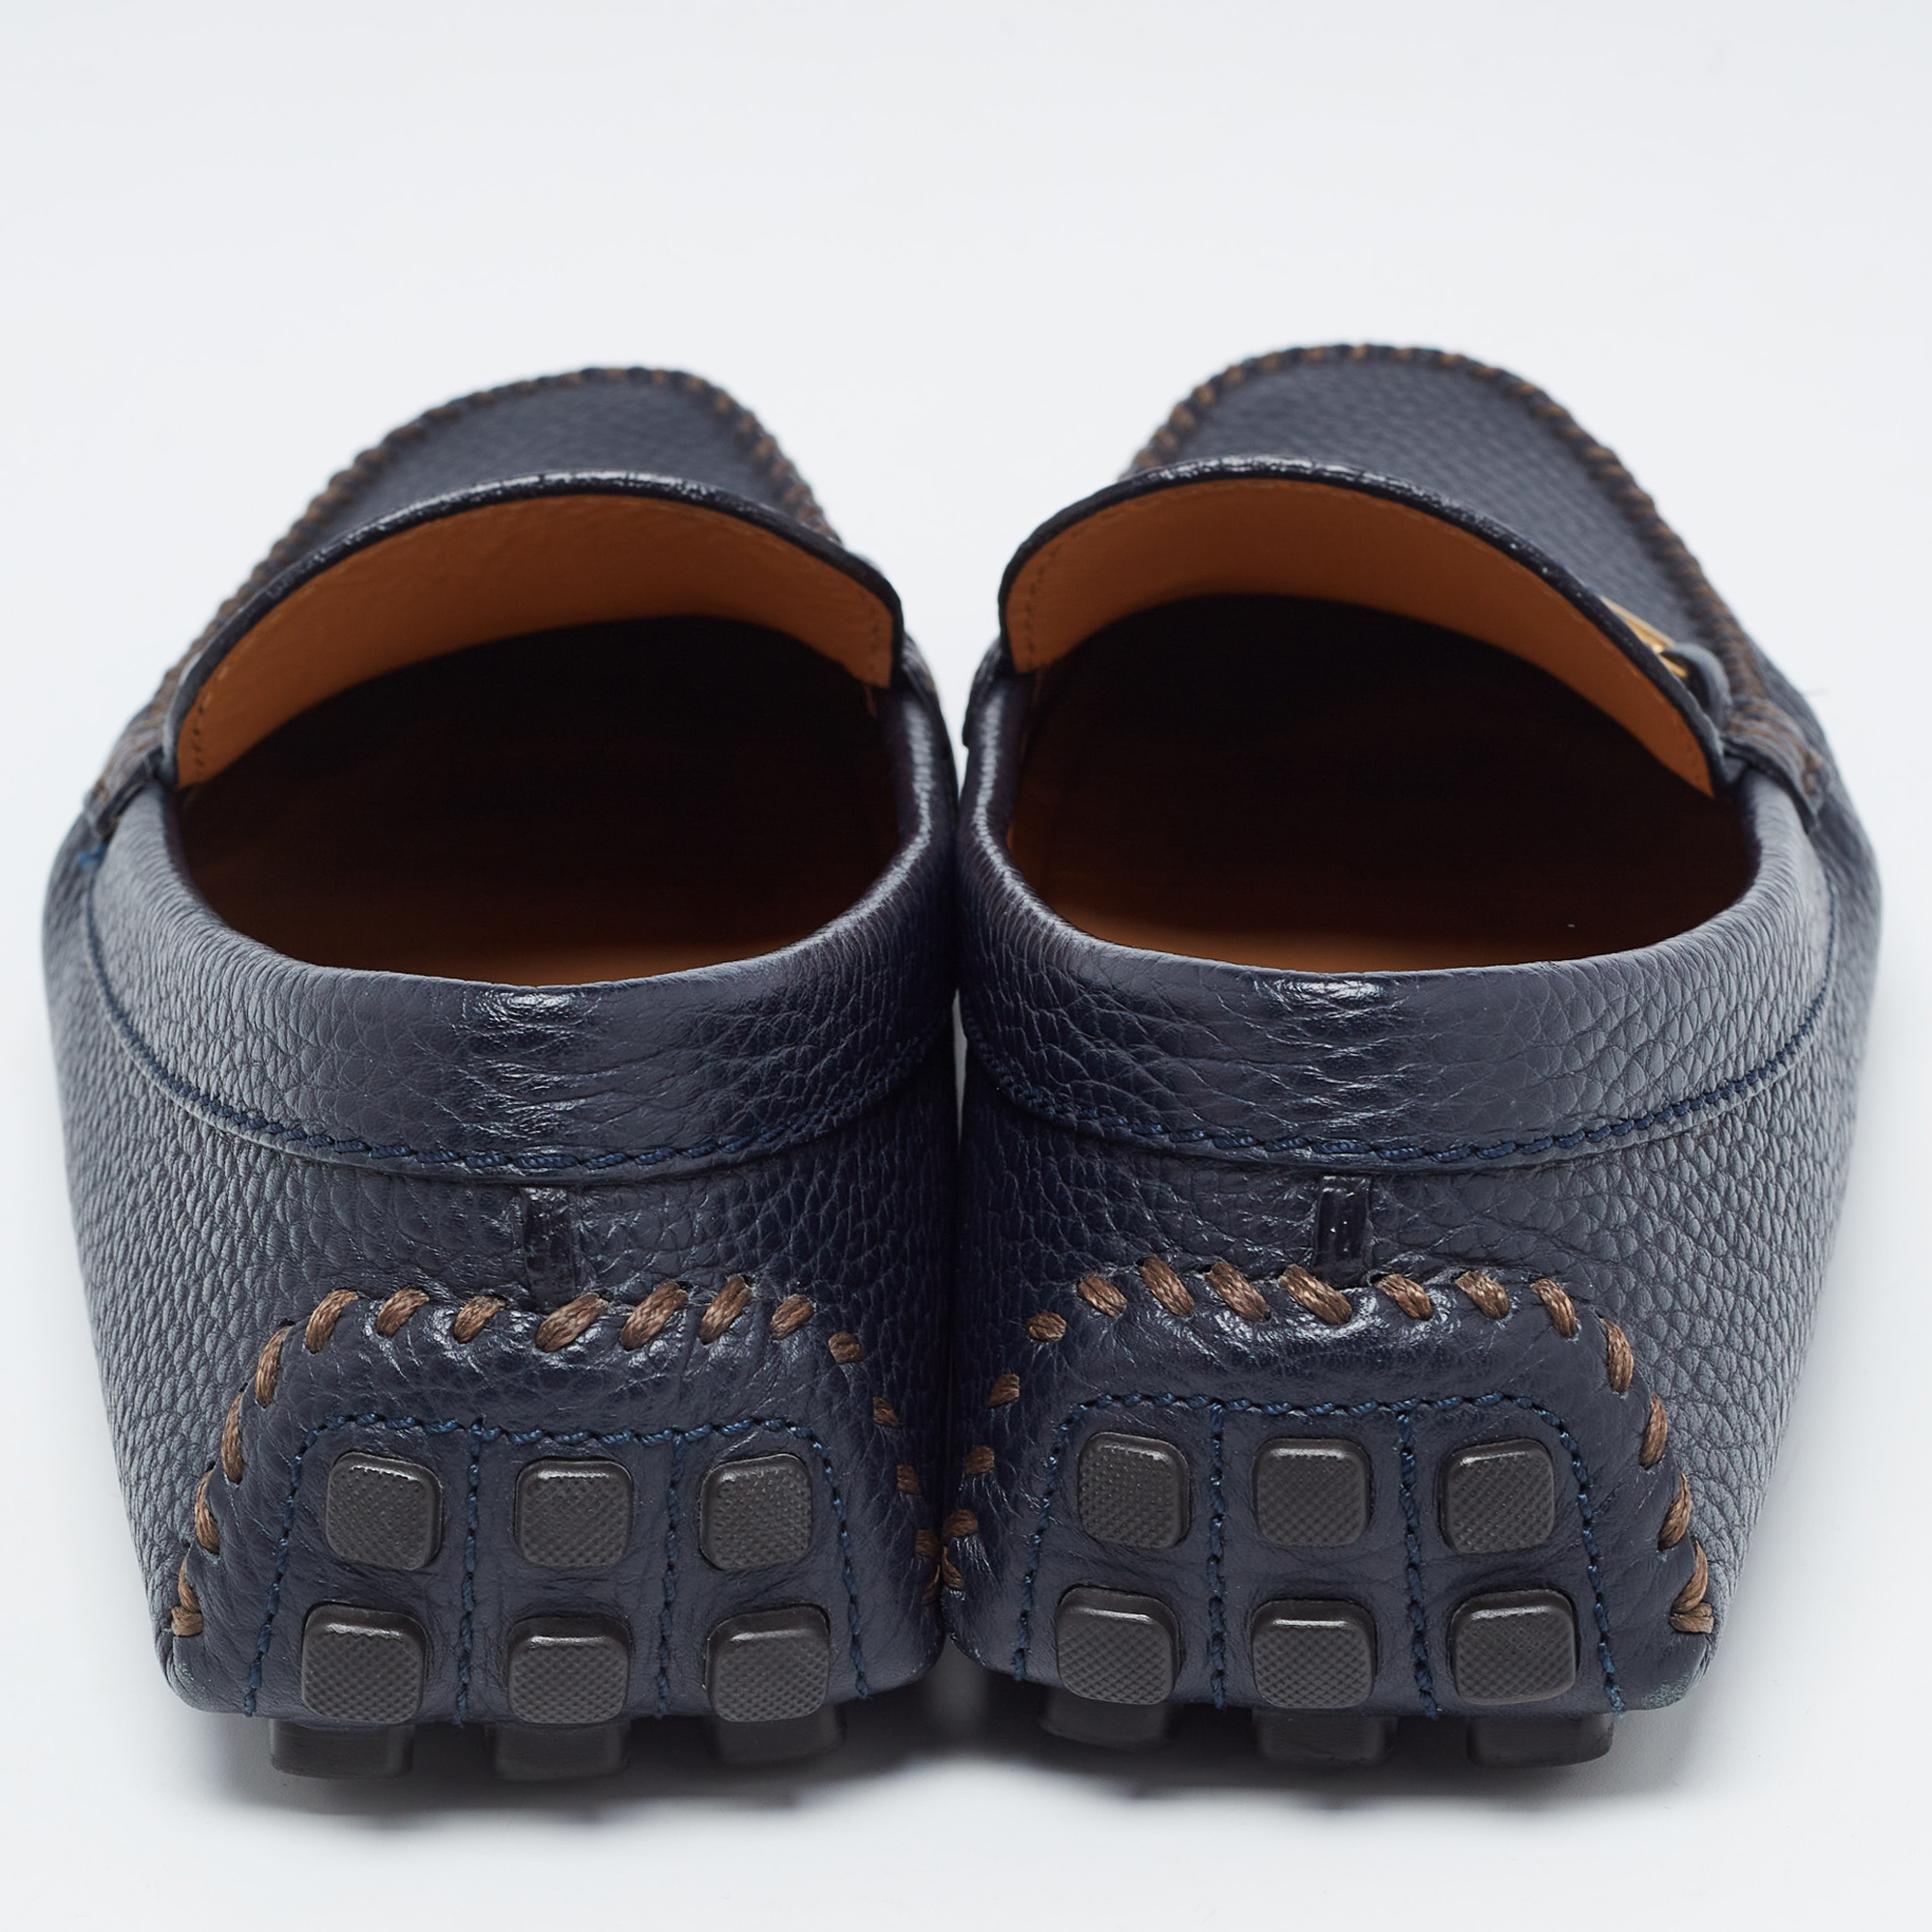 Louis Vuitton Navy Blue Epi Leather Raspail Slip On Loafers Size 42